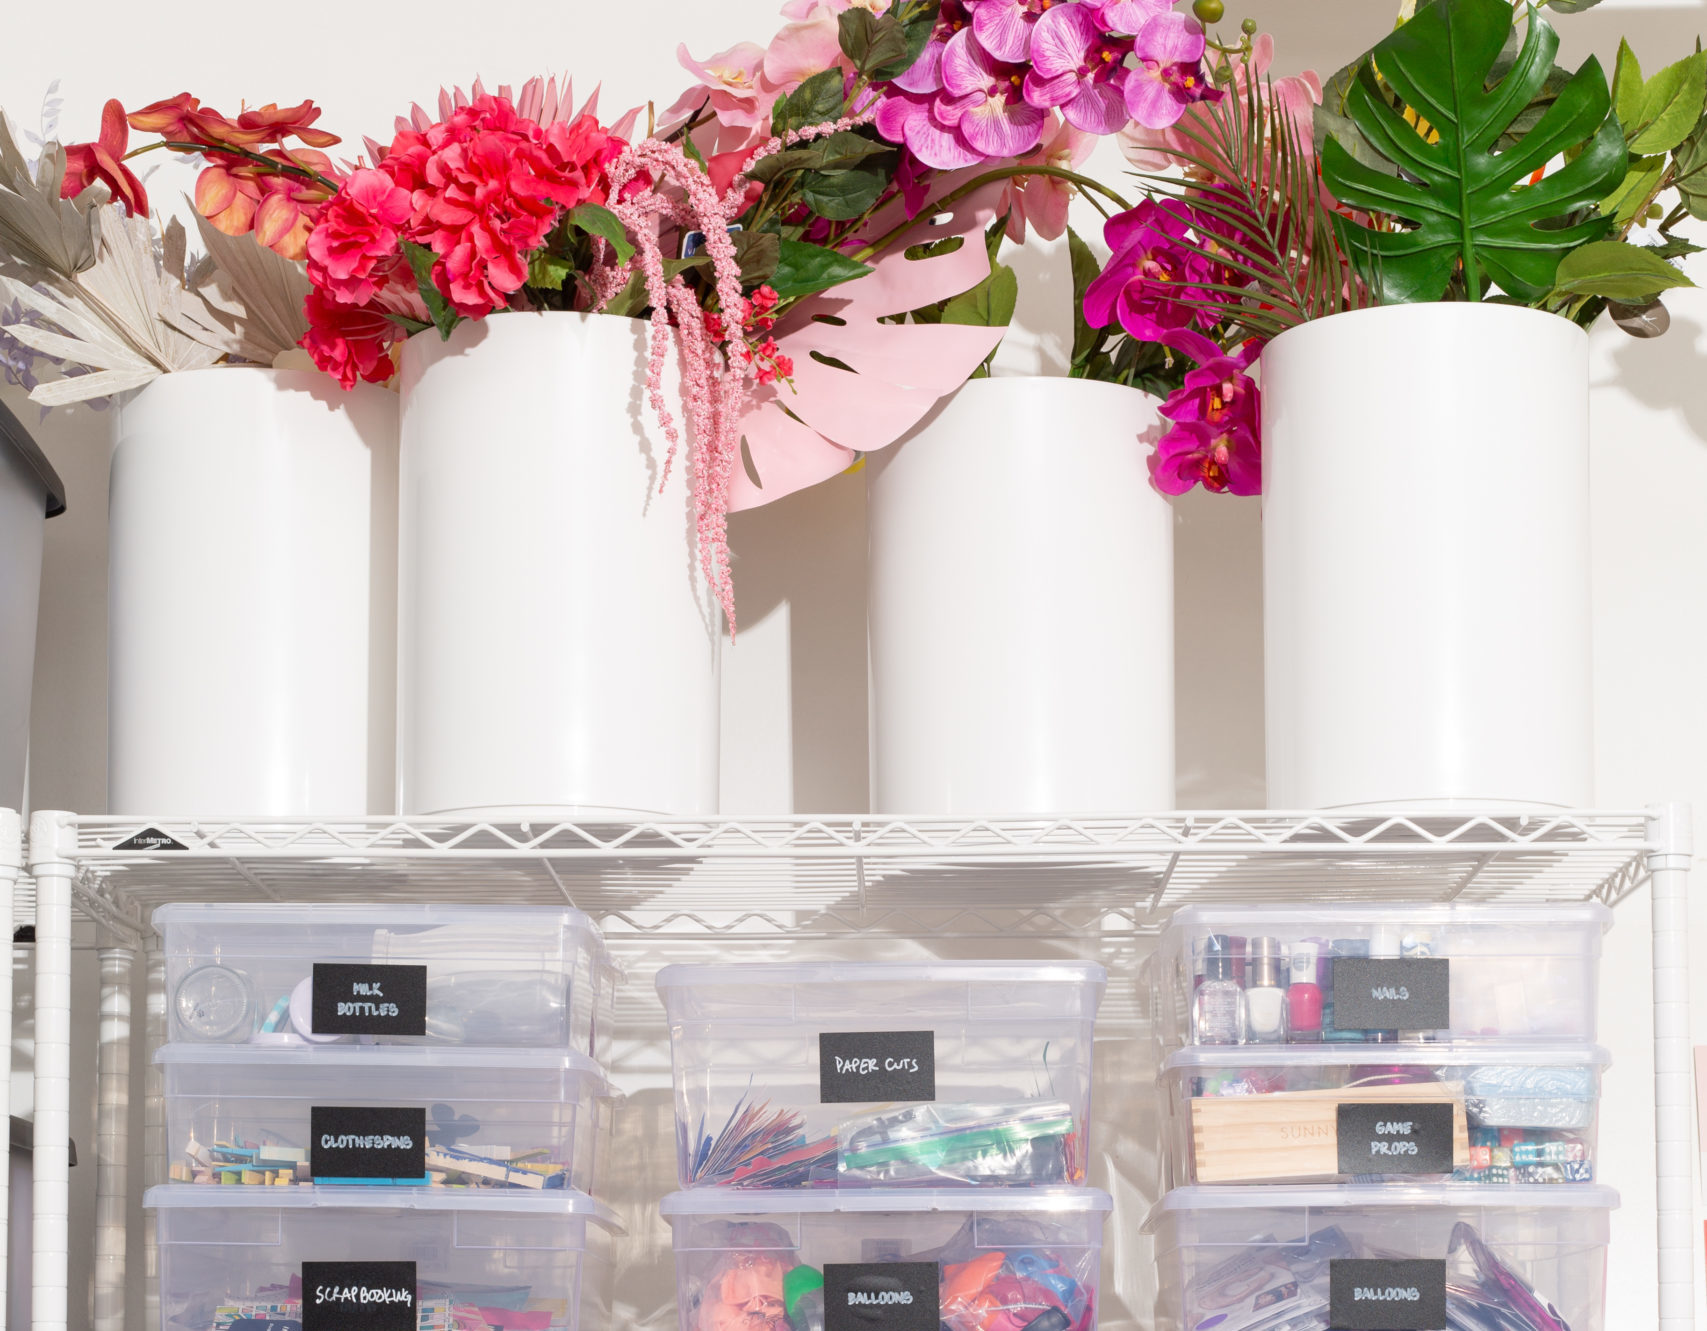 shelf of organized bins featuring white trash bins used as storage of florals